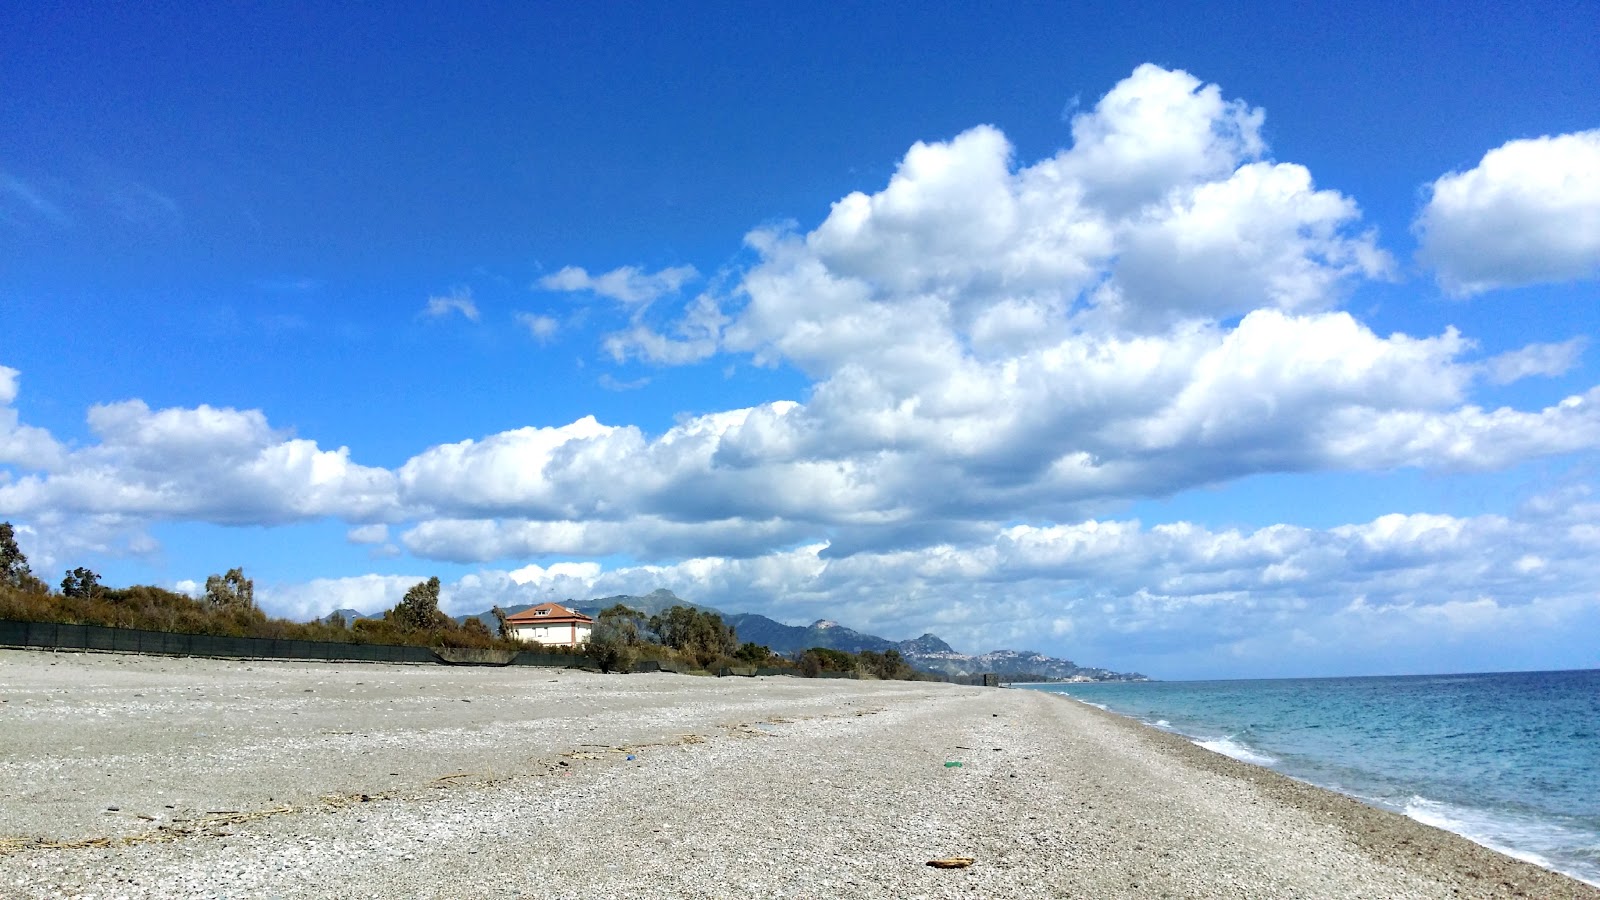 Foto av Spiaggia Fondachello med lång rak strand